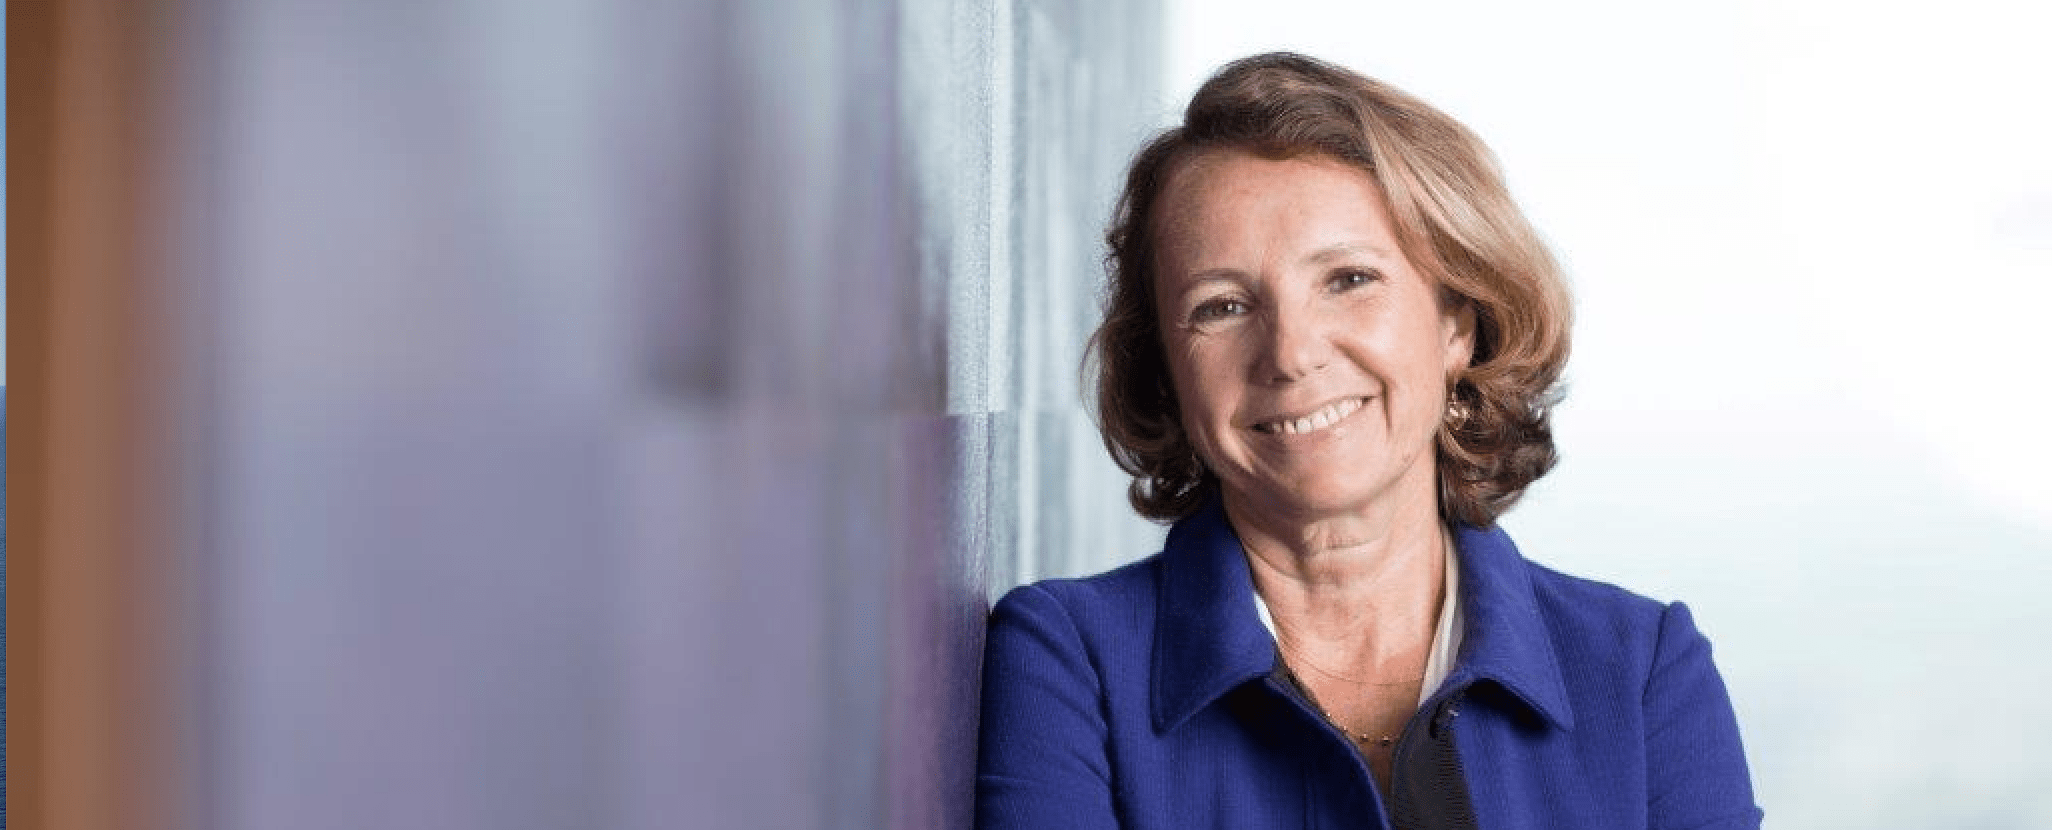 Marie-Ange Debon nomeada presidente executiva da Keolis